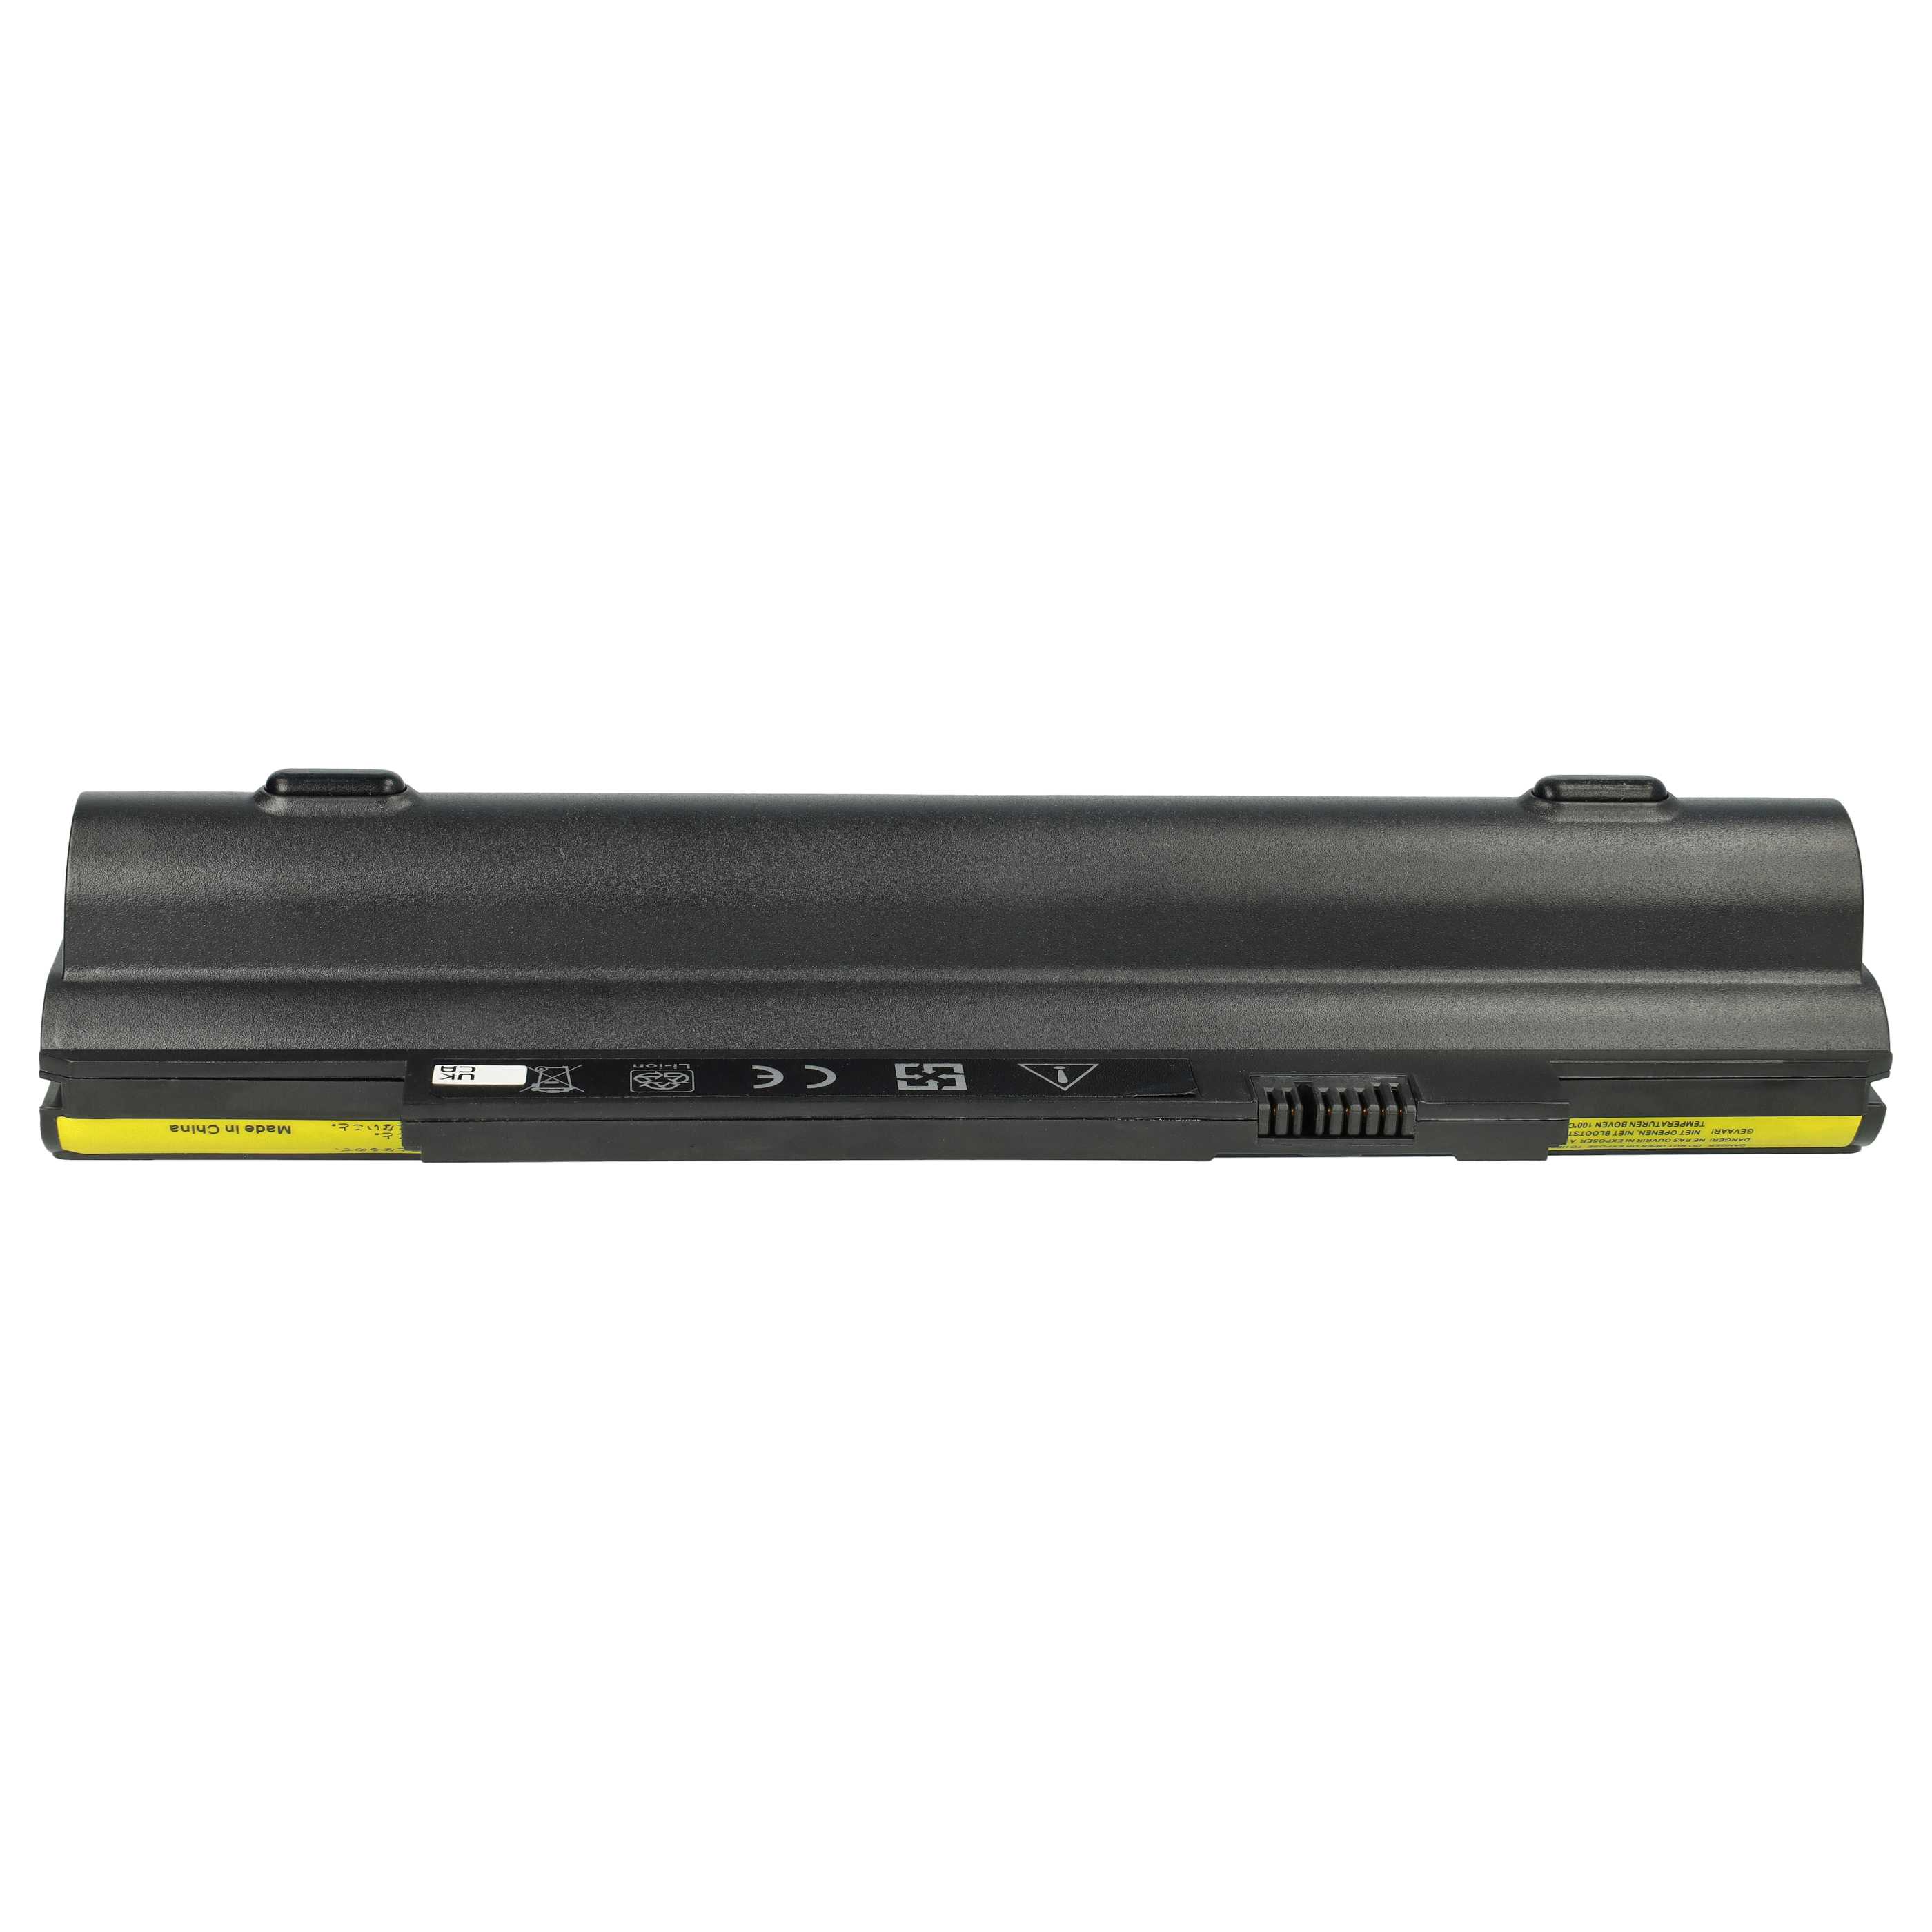 Akumulator do laptopa zamiennik Lenovo 42T4945, 42T4943, 0A36292, 0A36290 - 6600 mAh 11,1 V Li-Ion, czarny